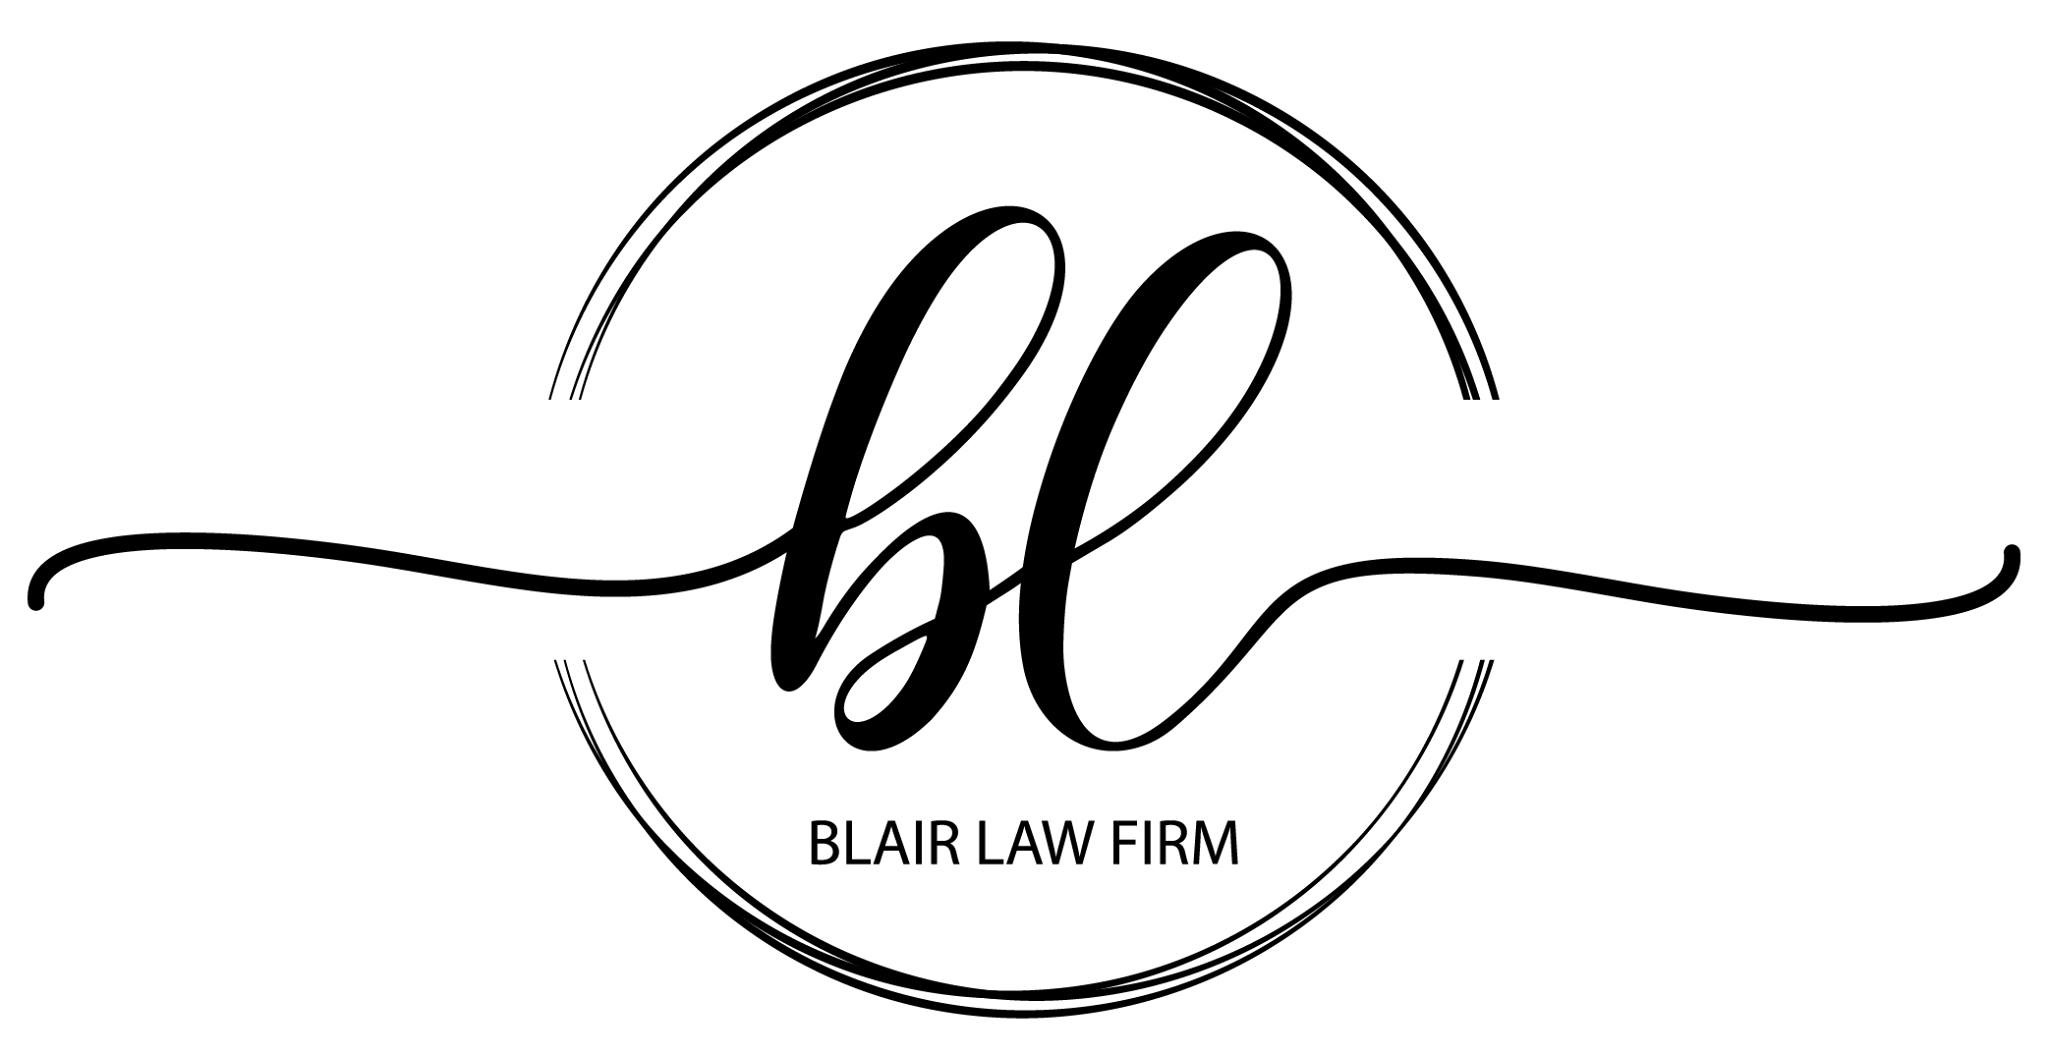 Blair Law Firm